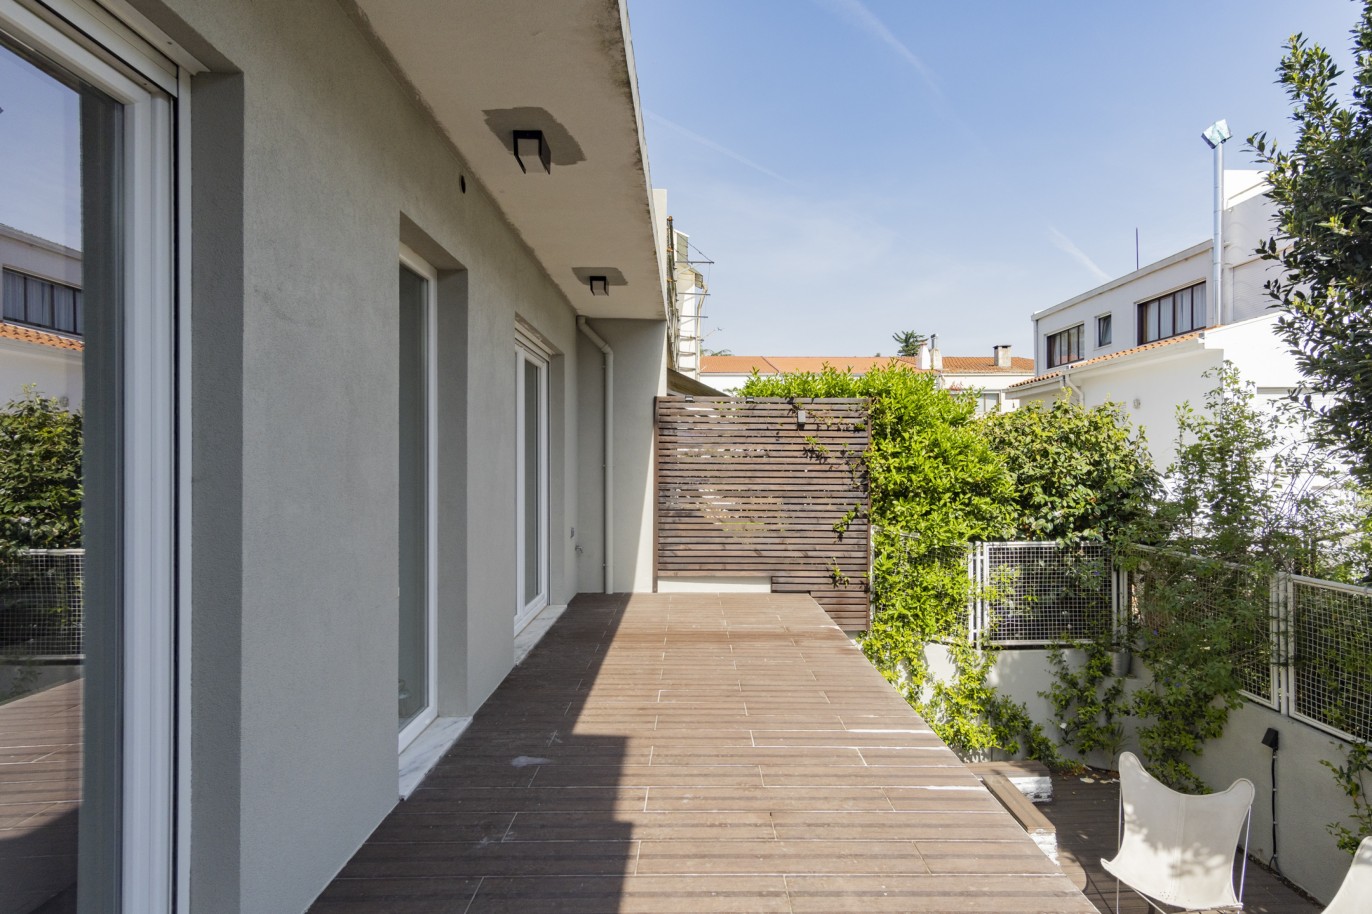 Villa de 5 dormitorios con terraza, en venta, en Lordelo do Ouro, Porto, Portugal_222101